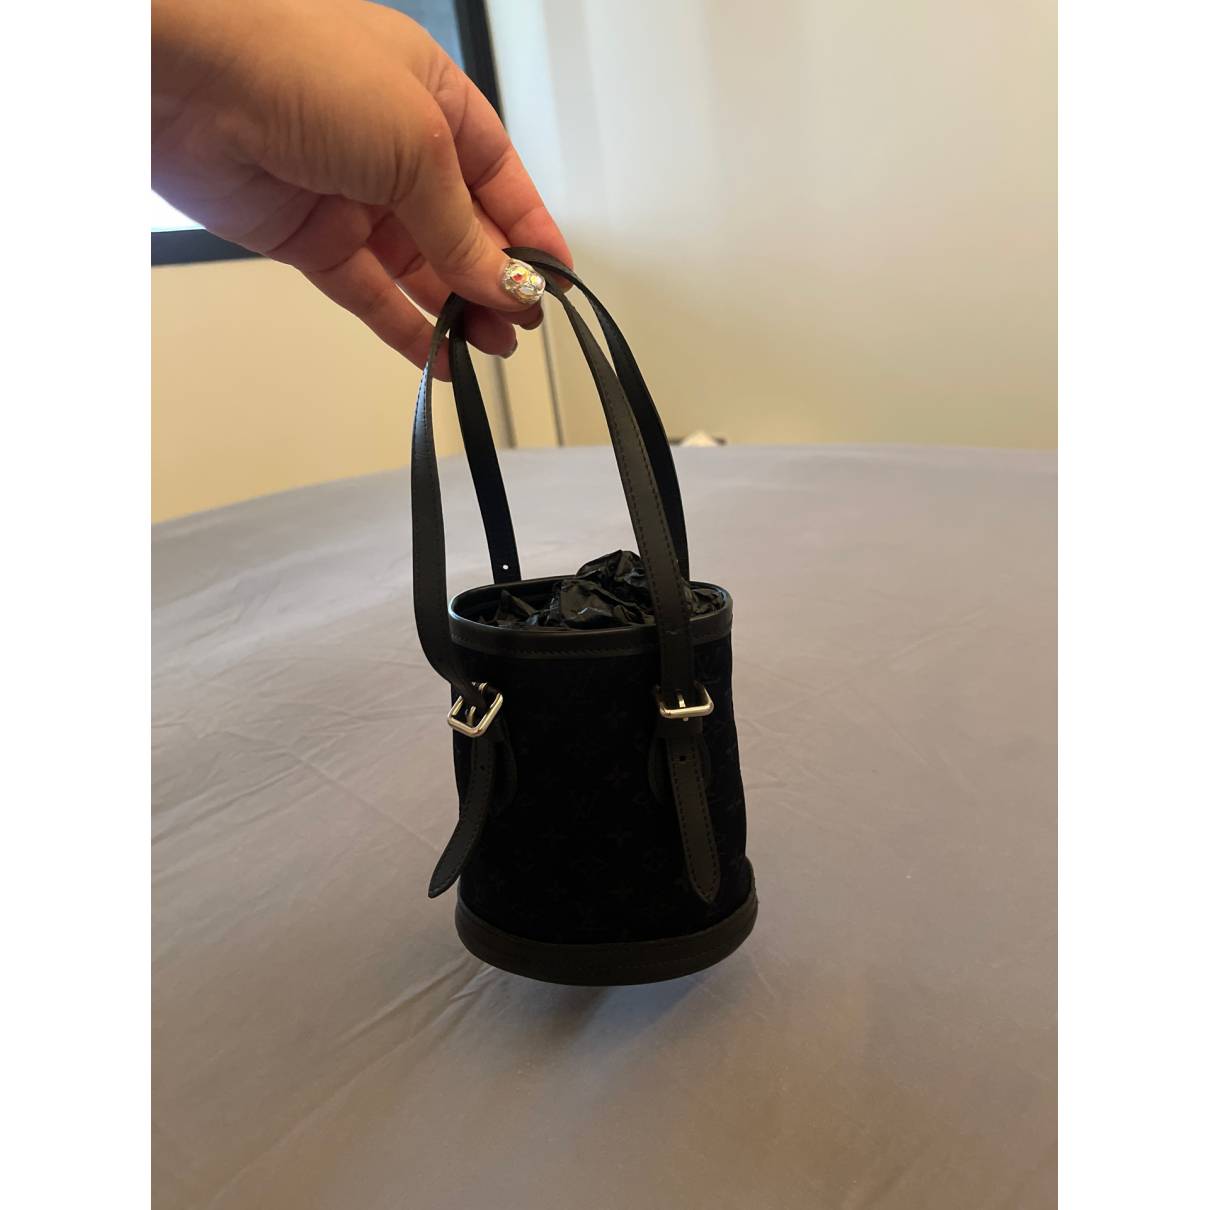 Louis Vuitton - Authenticated Handbag - Cloth Black for Women, Very Good Condition